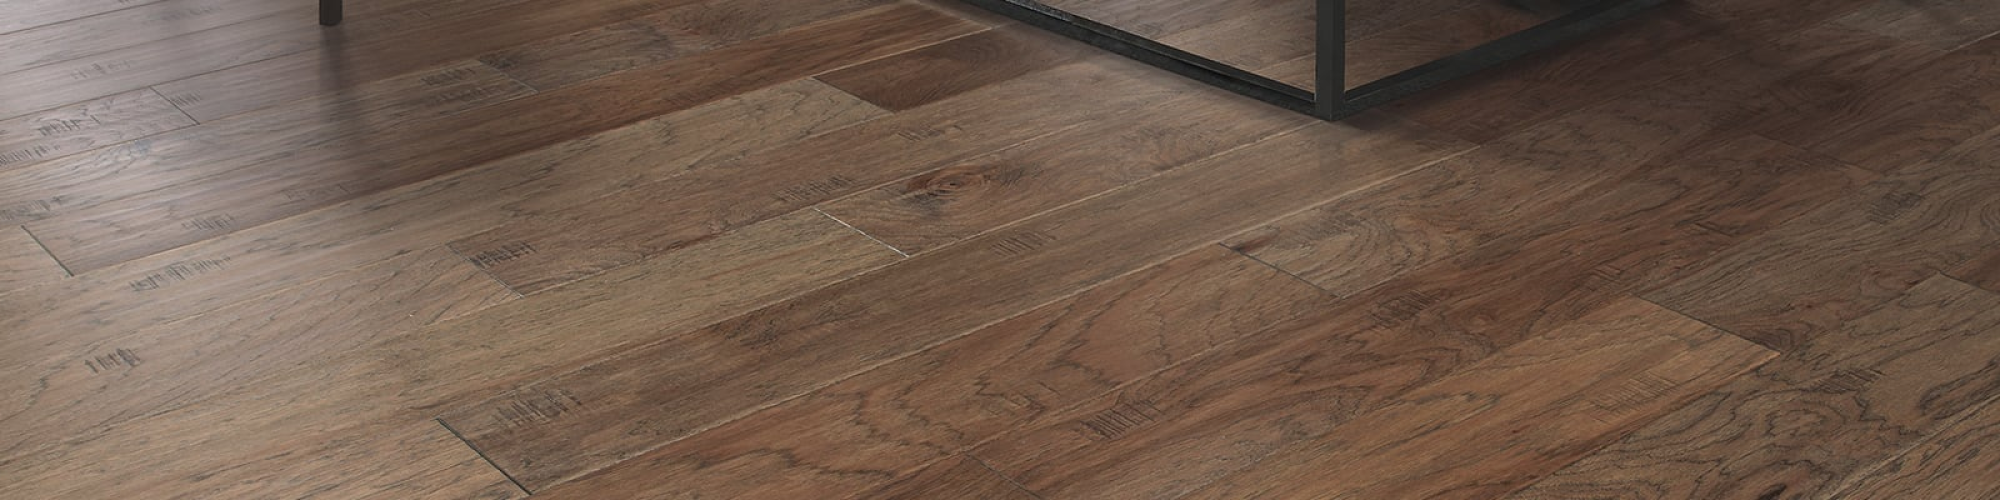 Hardwood flooring in formation provided by Premier Flooring & Design in Graner, NC